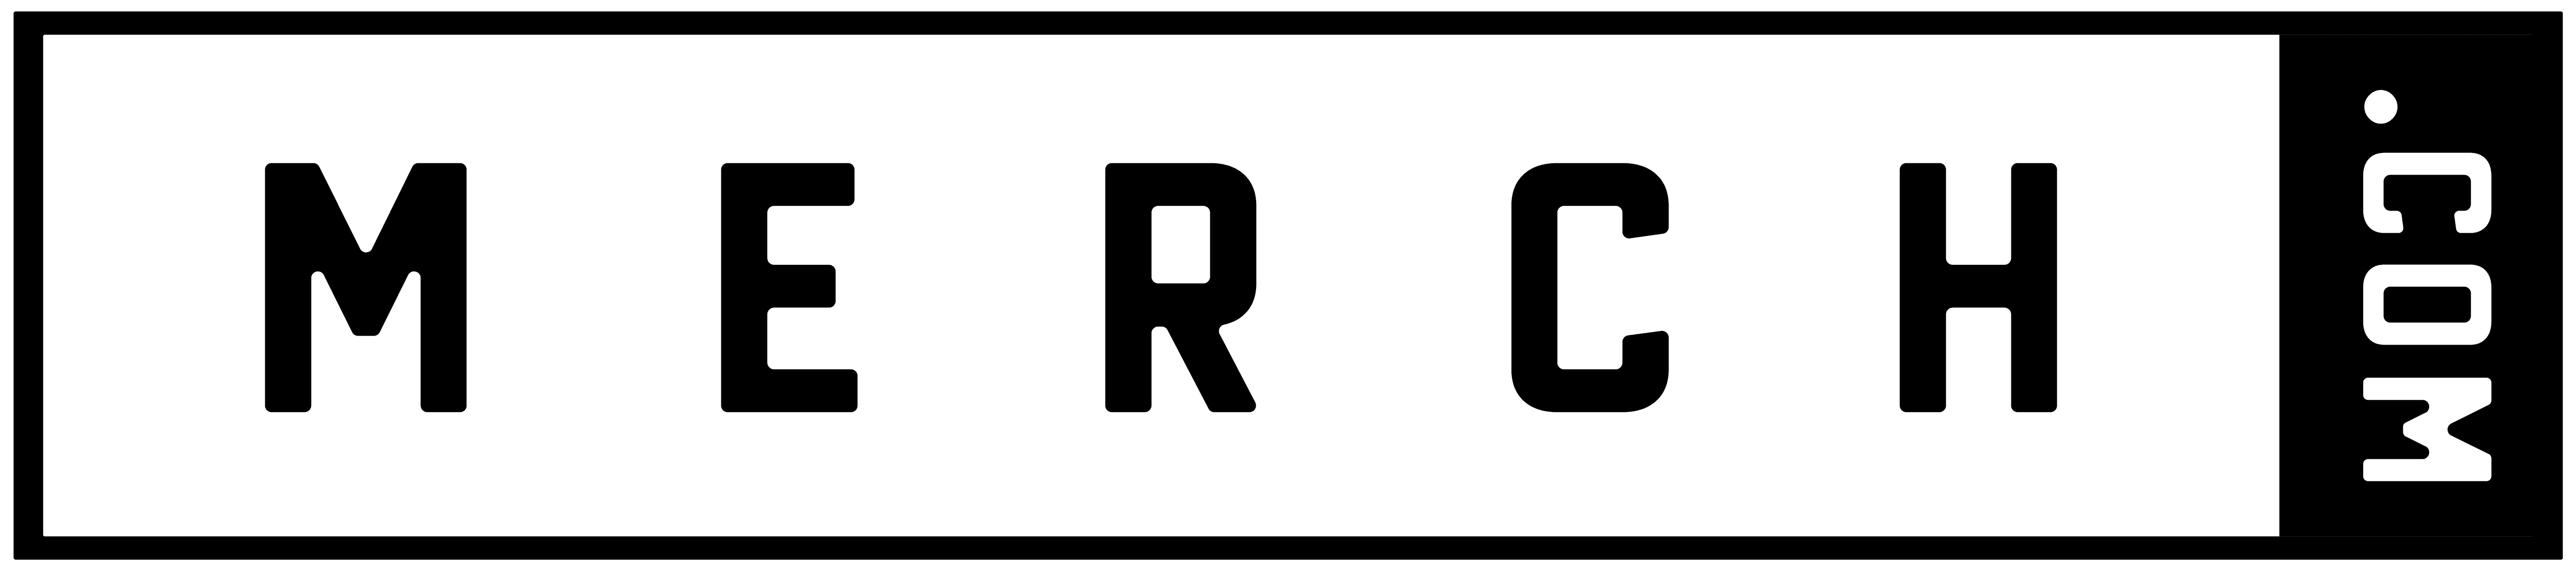 Merch logo